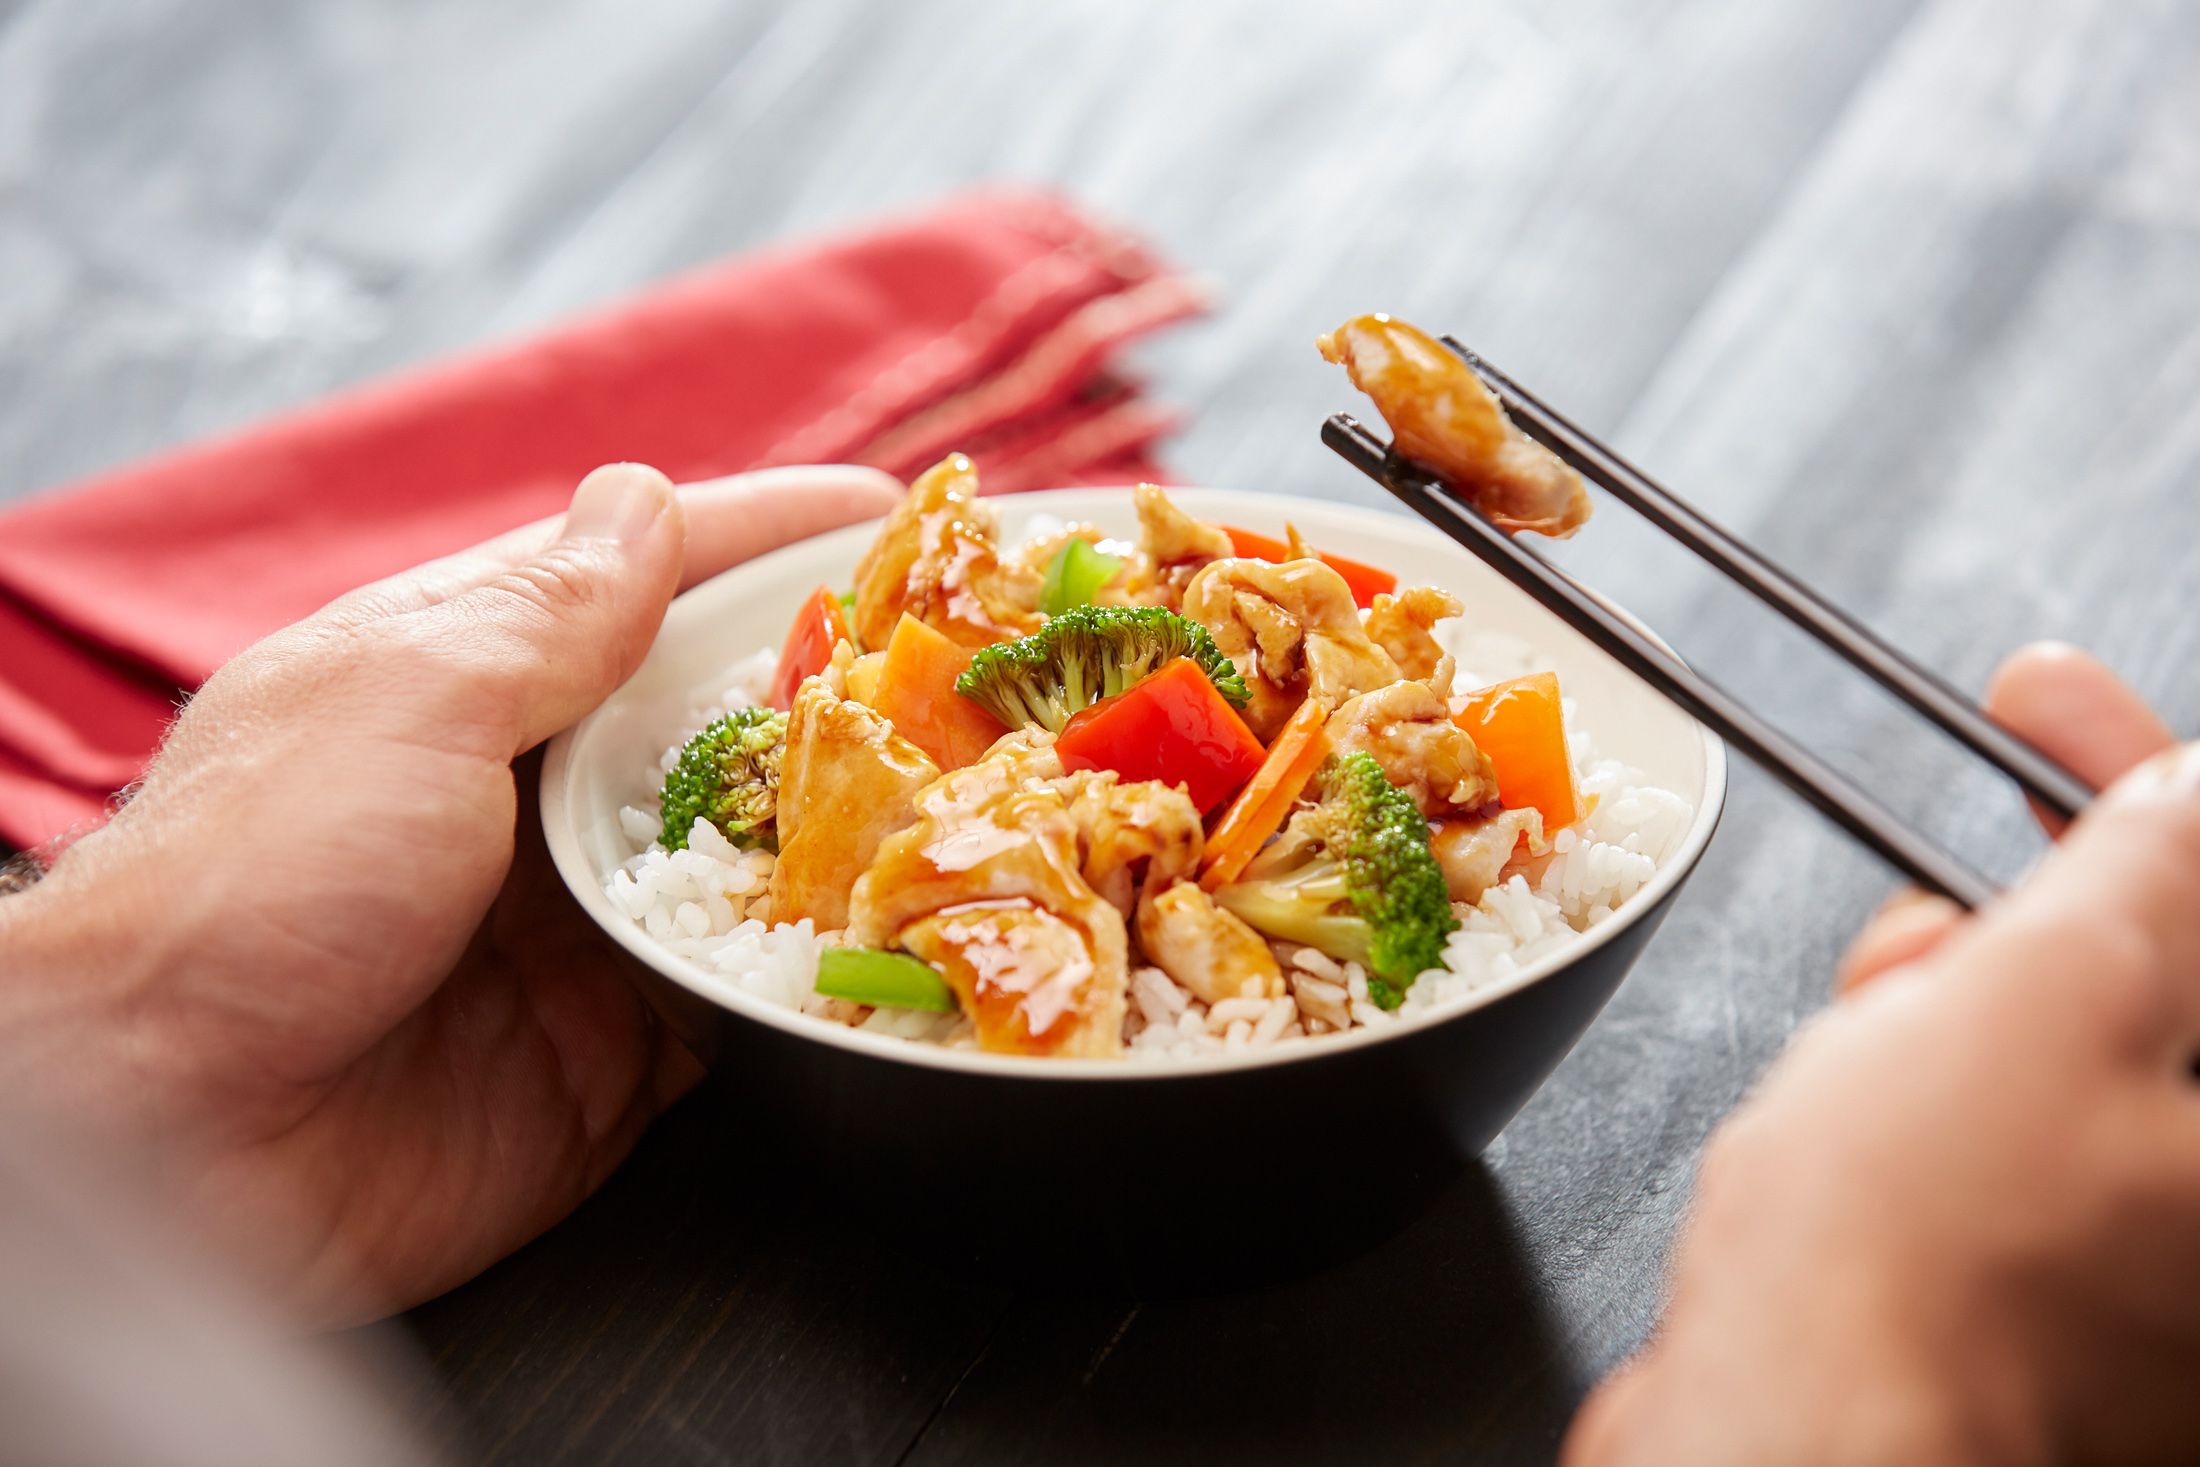 Food Photo - Lady Eating Teriyaki Chicken Rice With Chopsticks